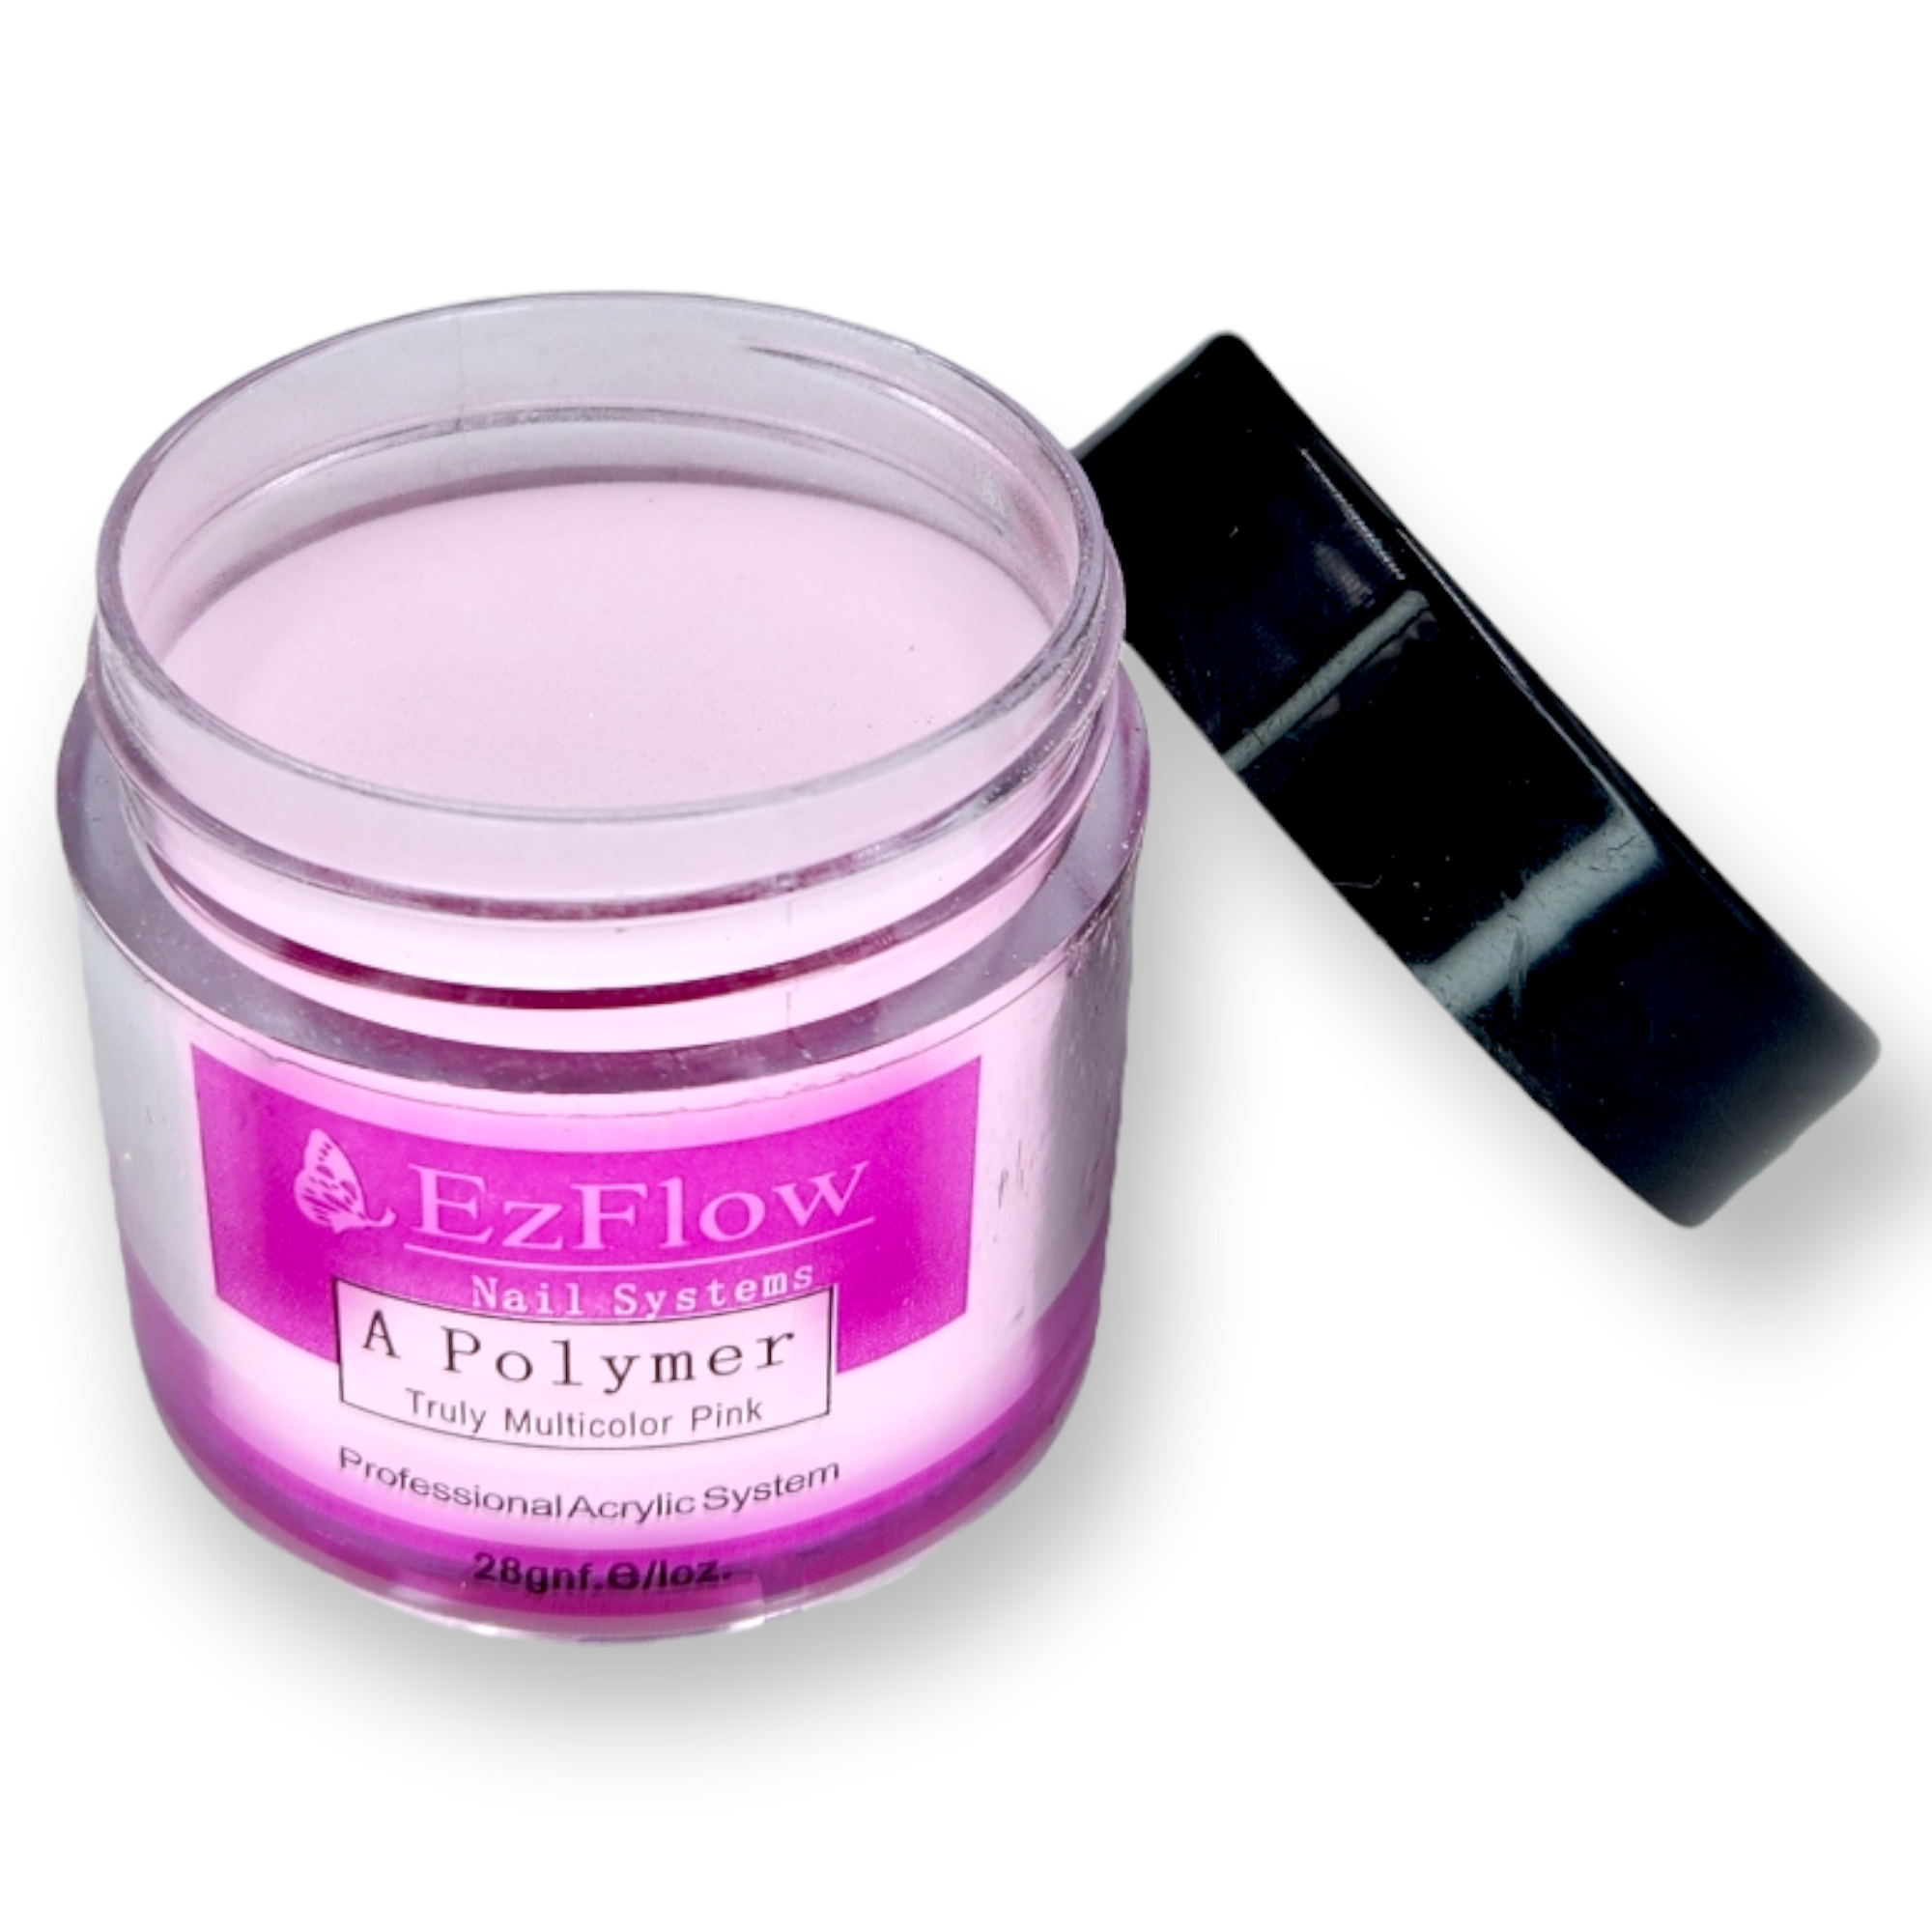 EzFlow A Polymer Powder in Vibrant Pink